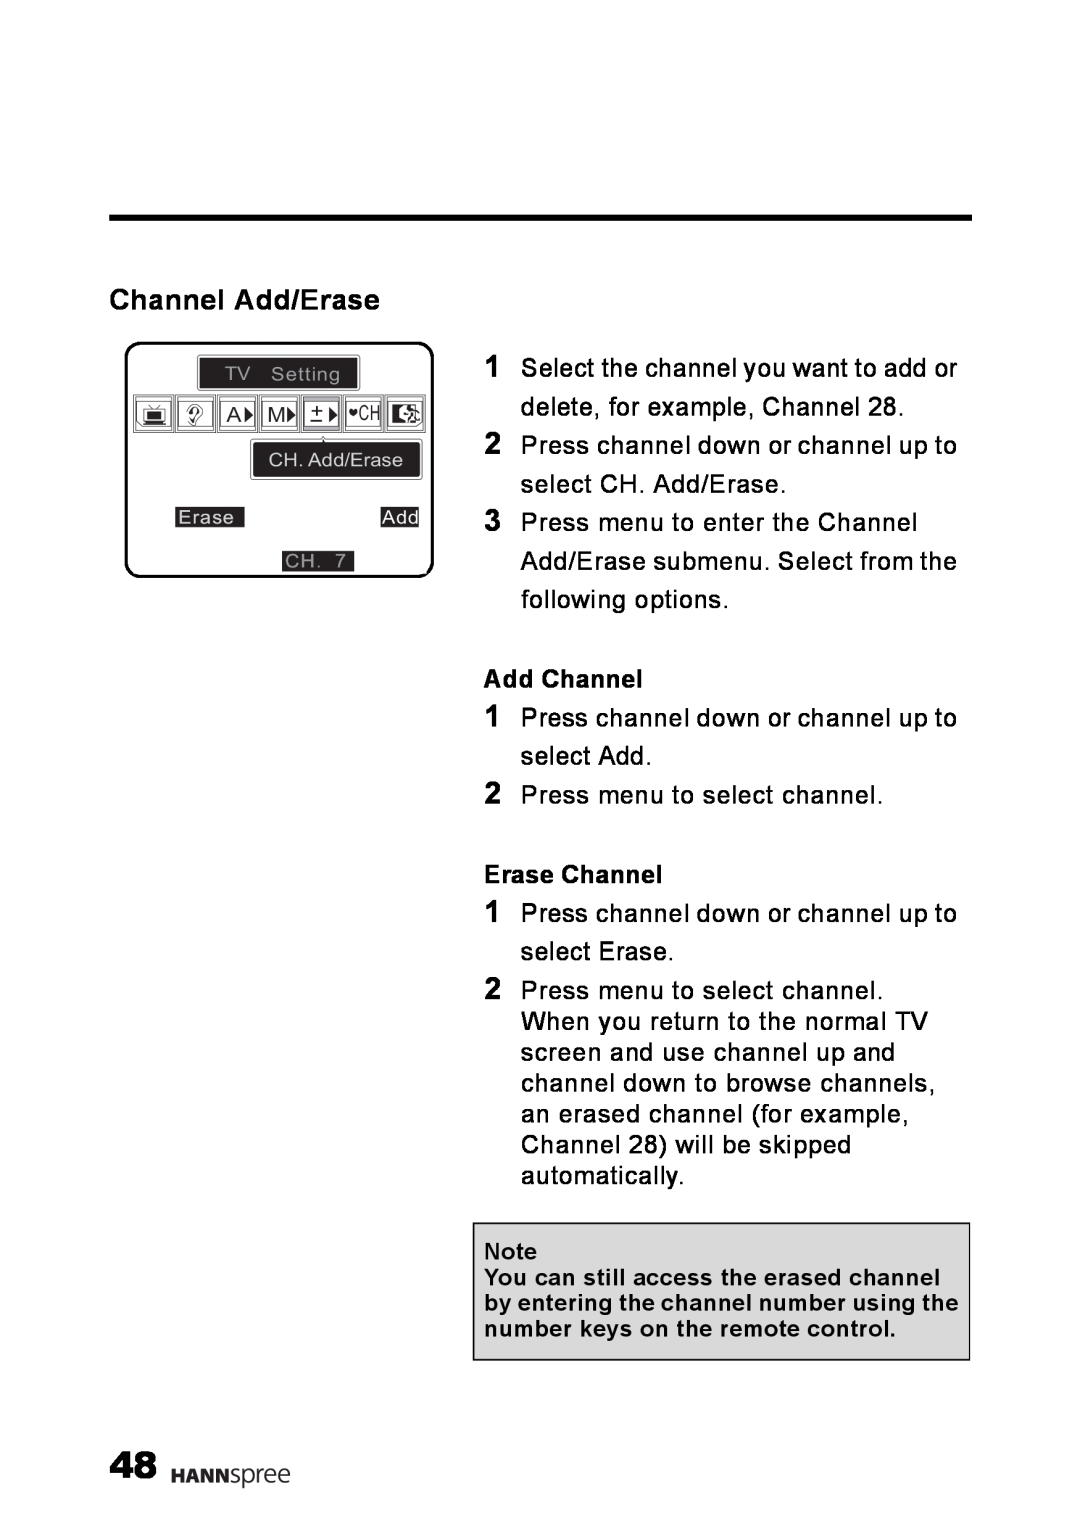 HANNspree LT02-12U1-000 user manual Channel Add/Erase, Add Channel, Erase Channel 